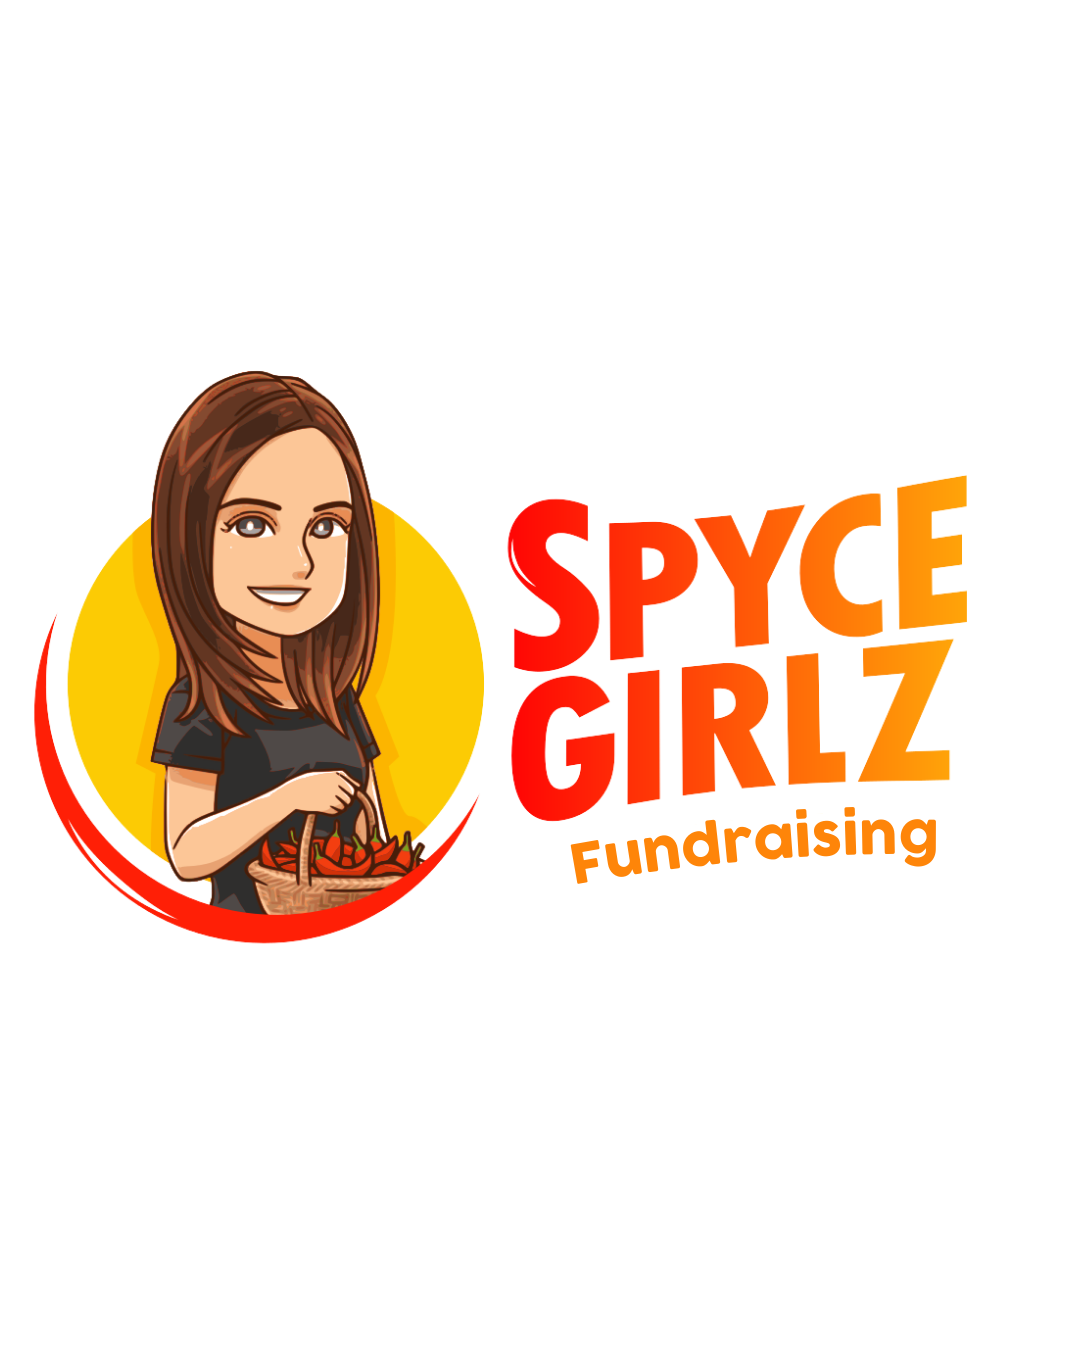 Spyce Girlz Fundraising